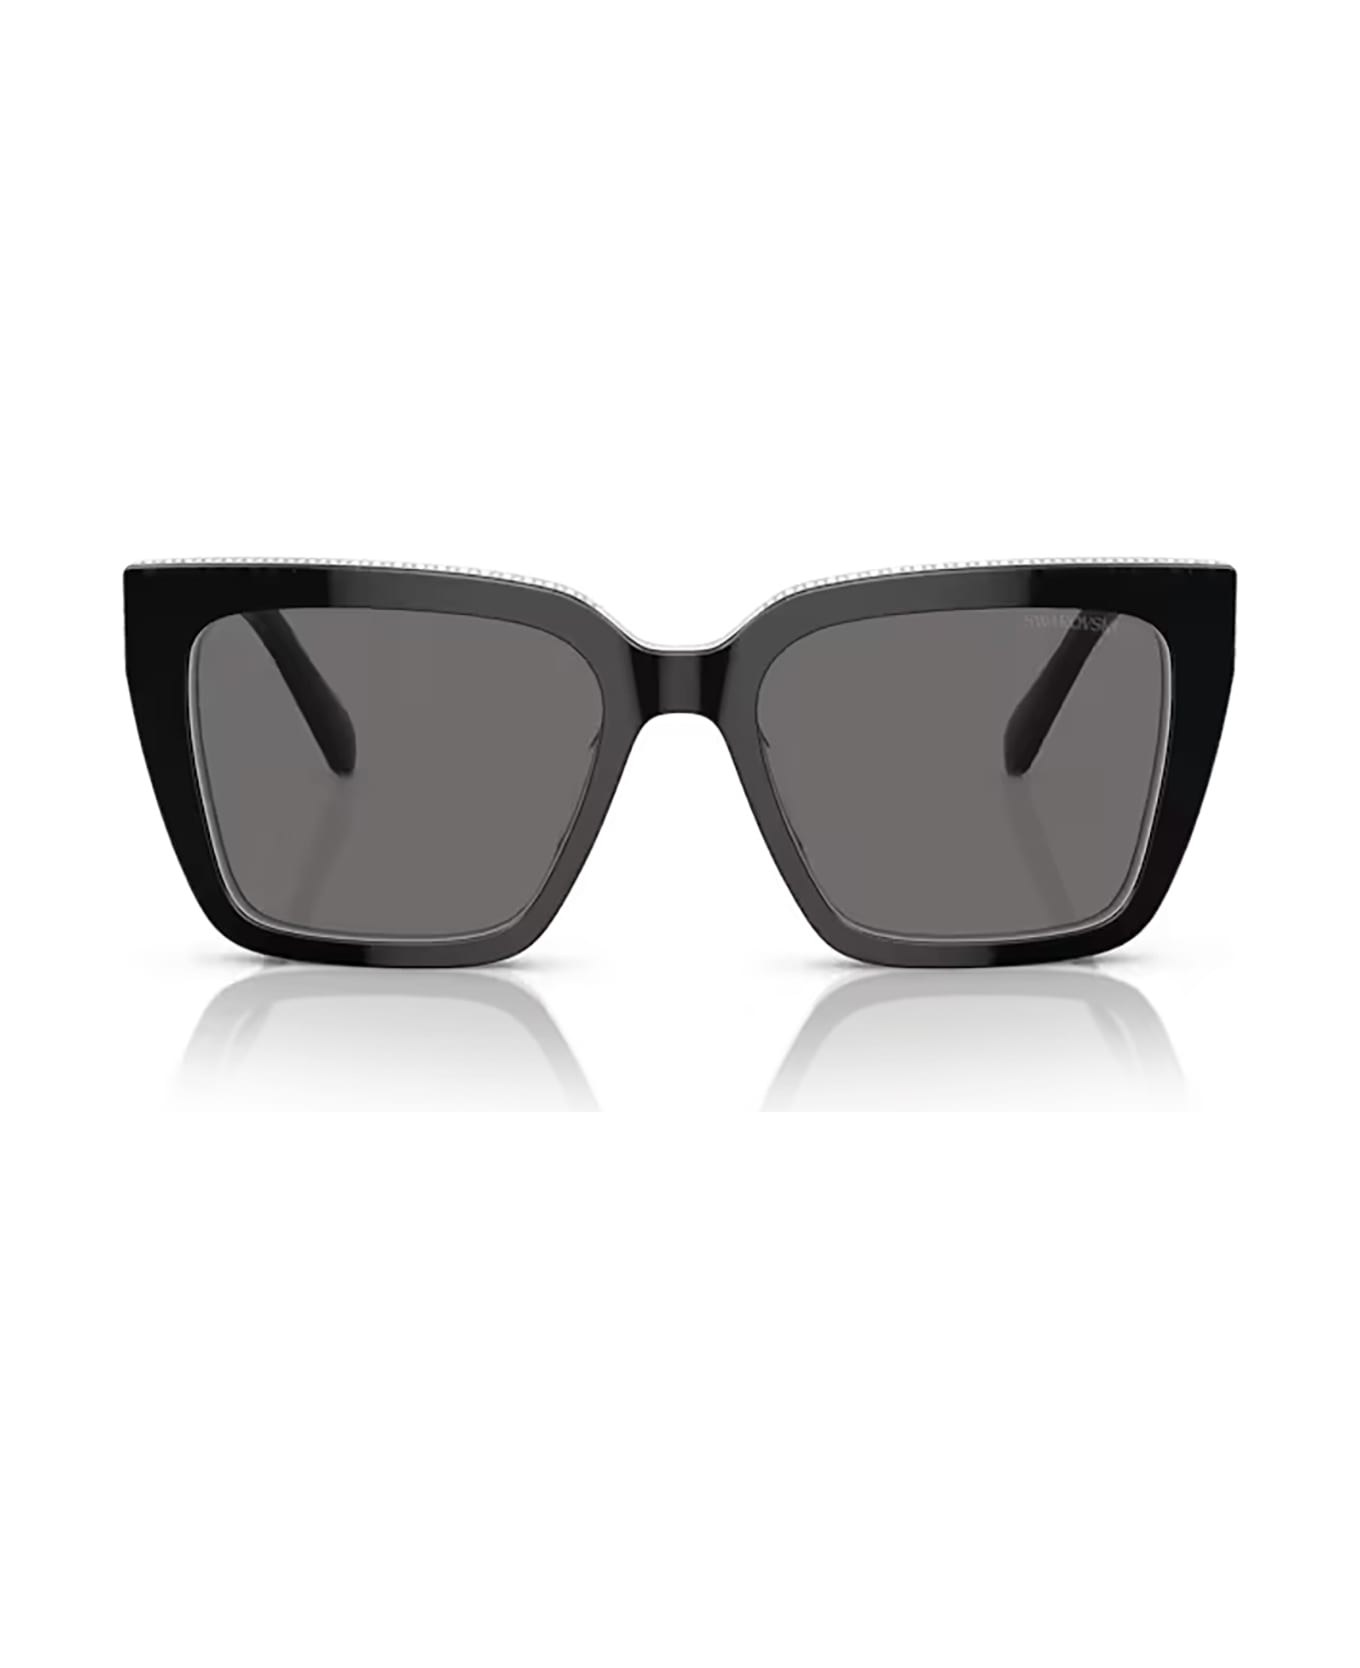 Swarovski Sk6013 Black Sunglasses - Black